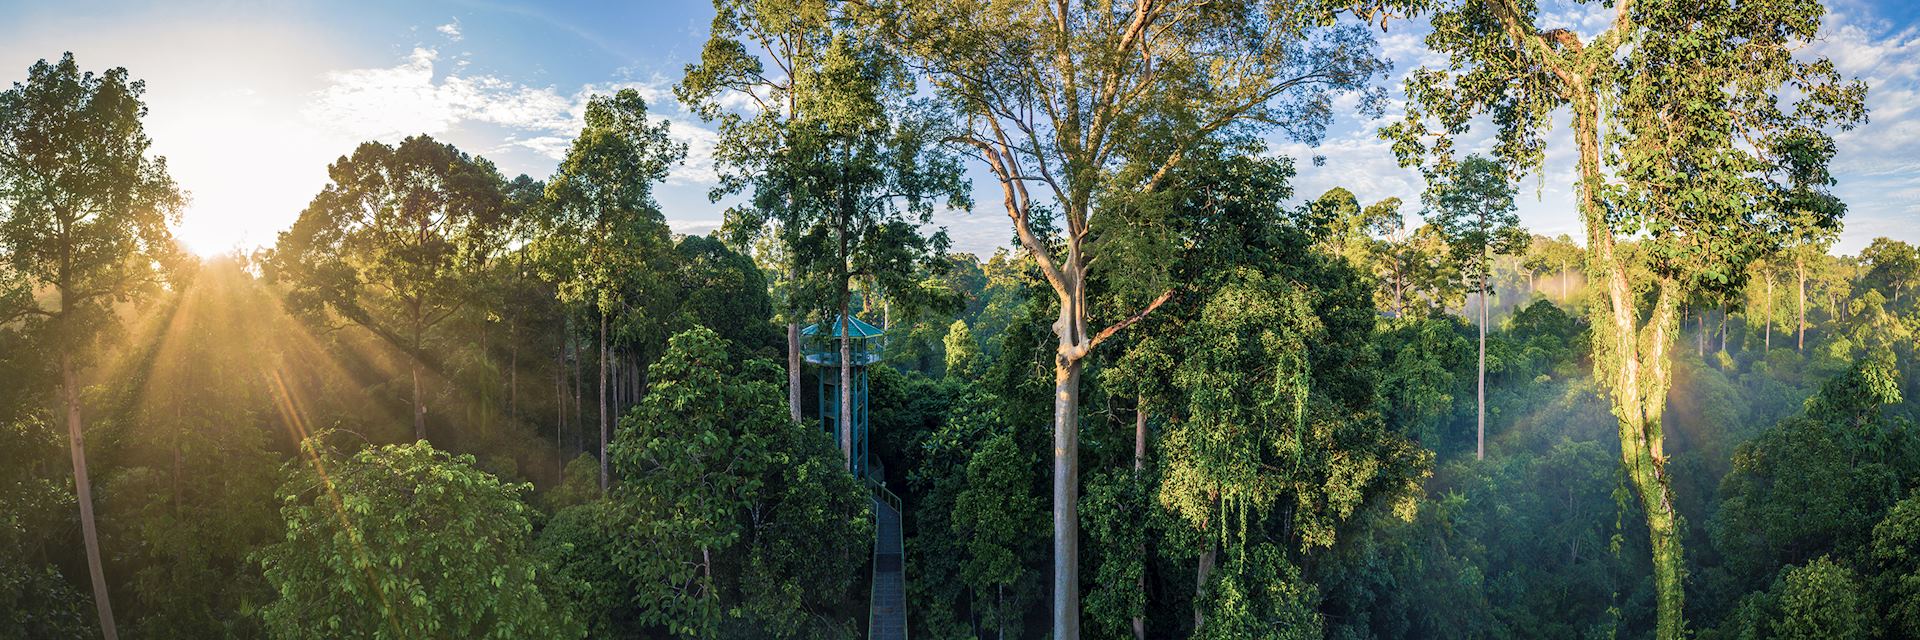 Rainforest canopy in Sepilok, Borneo